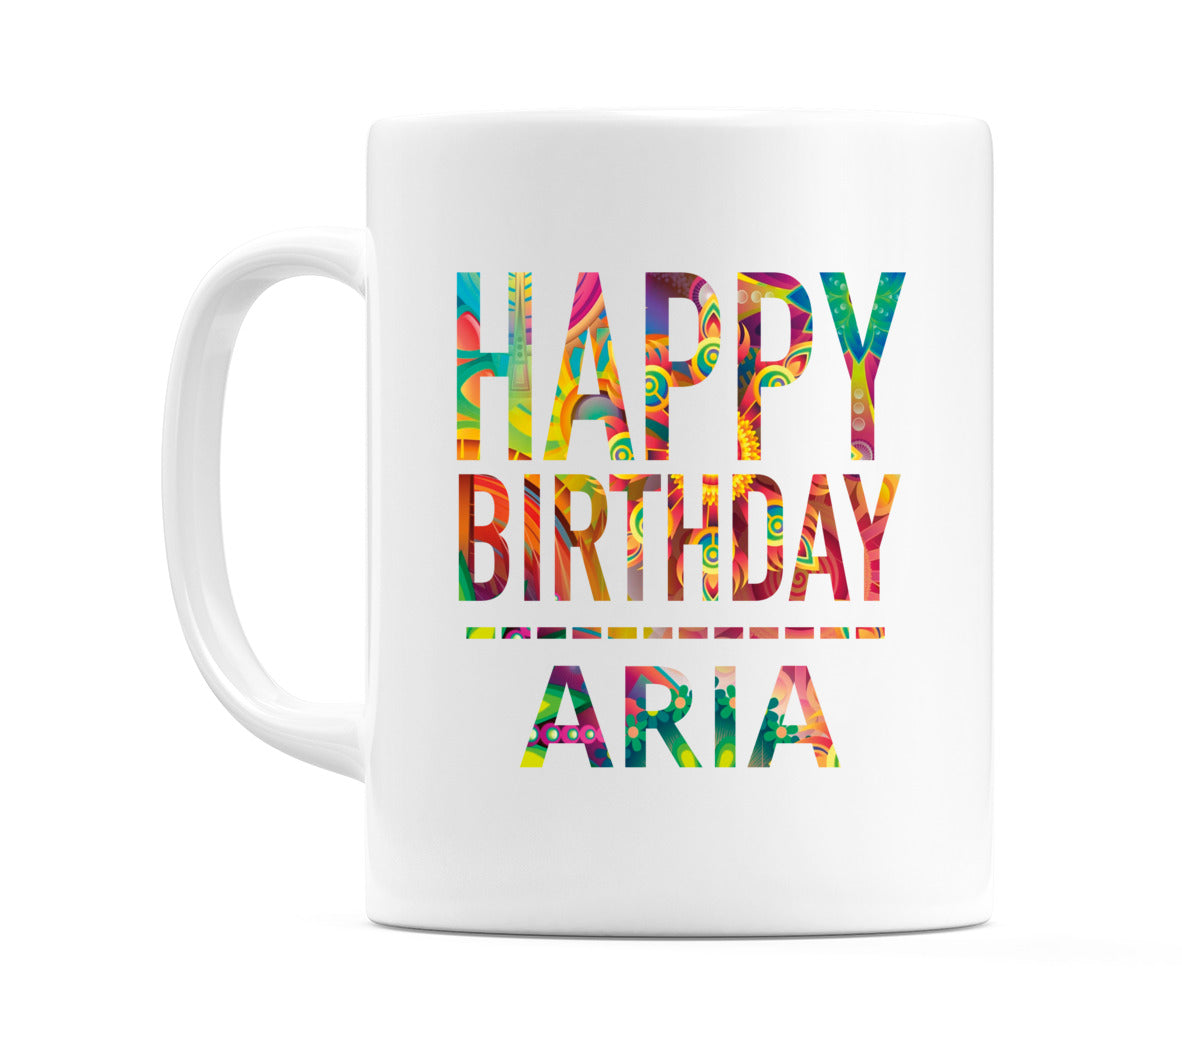 Happy Birthday Aria (Tie Dye Effect) Mug Cup by WeDoMugs